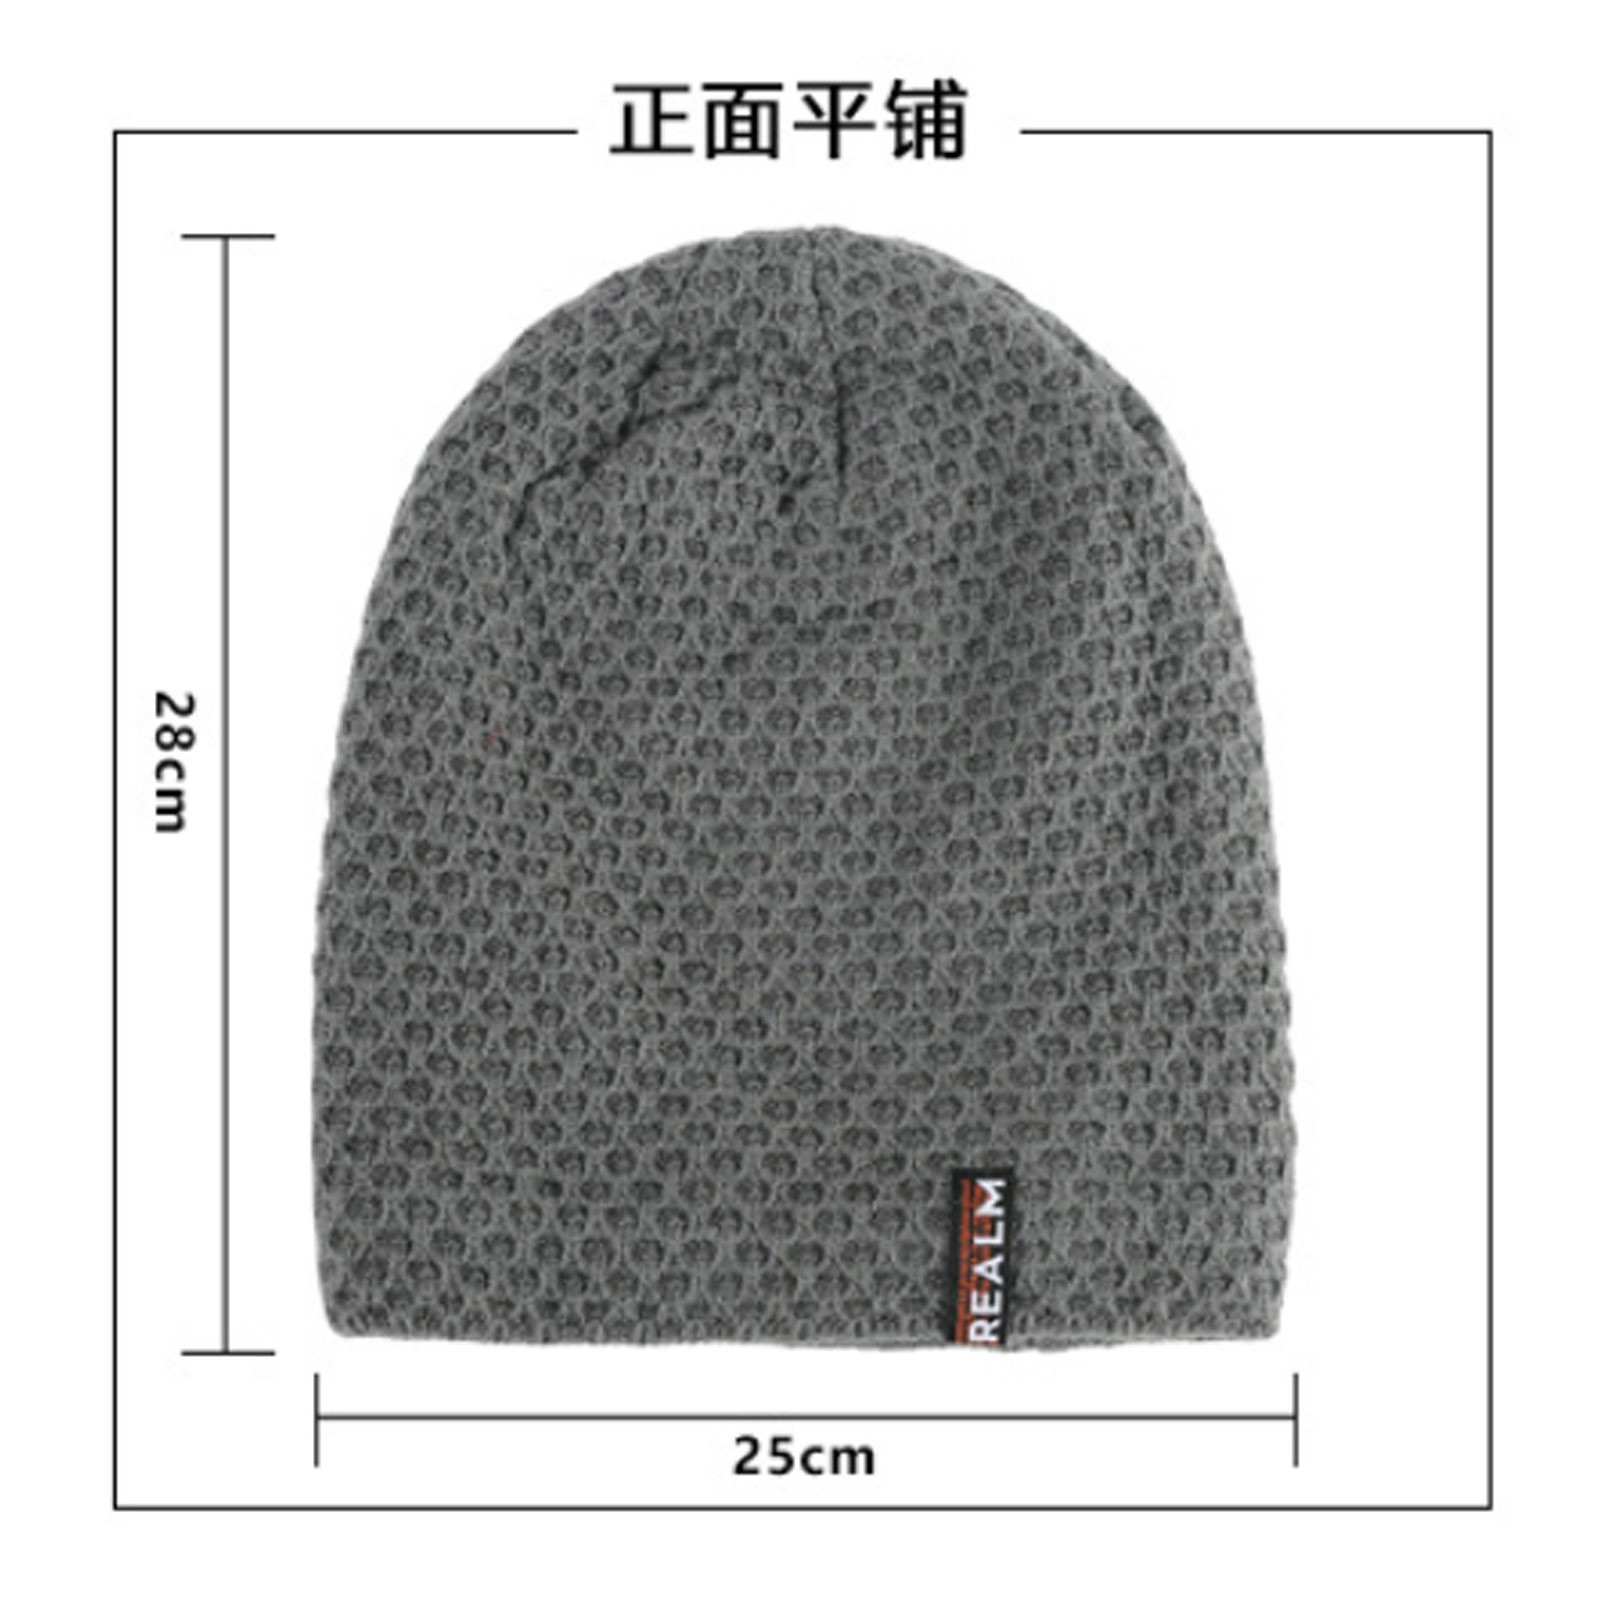 Yuelianxi Winter Hats for Men Women Soft Warm Knit Hat Ski Stocking Cap ...